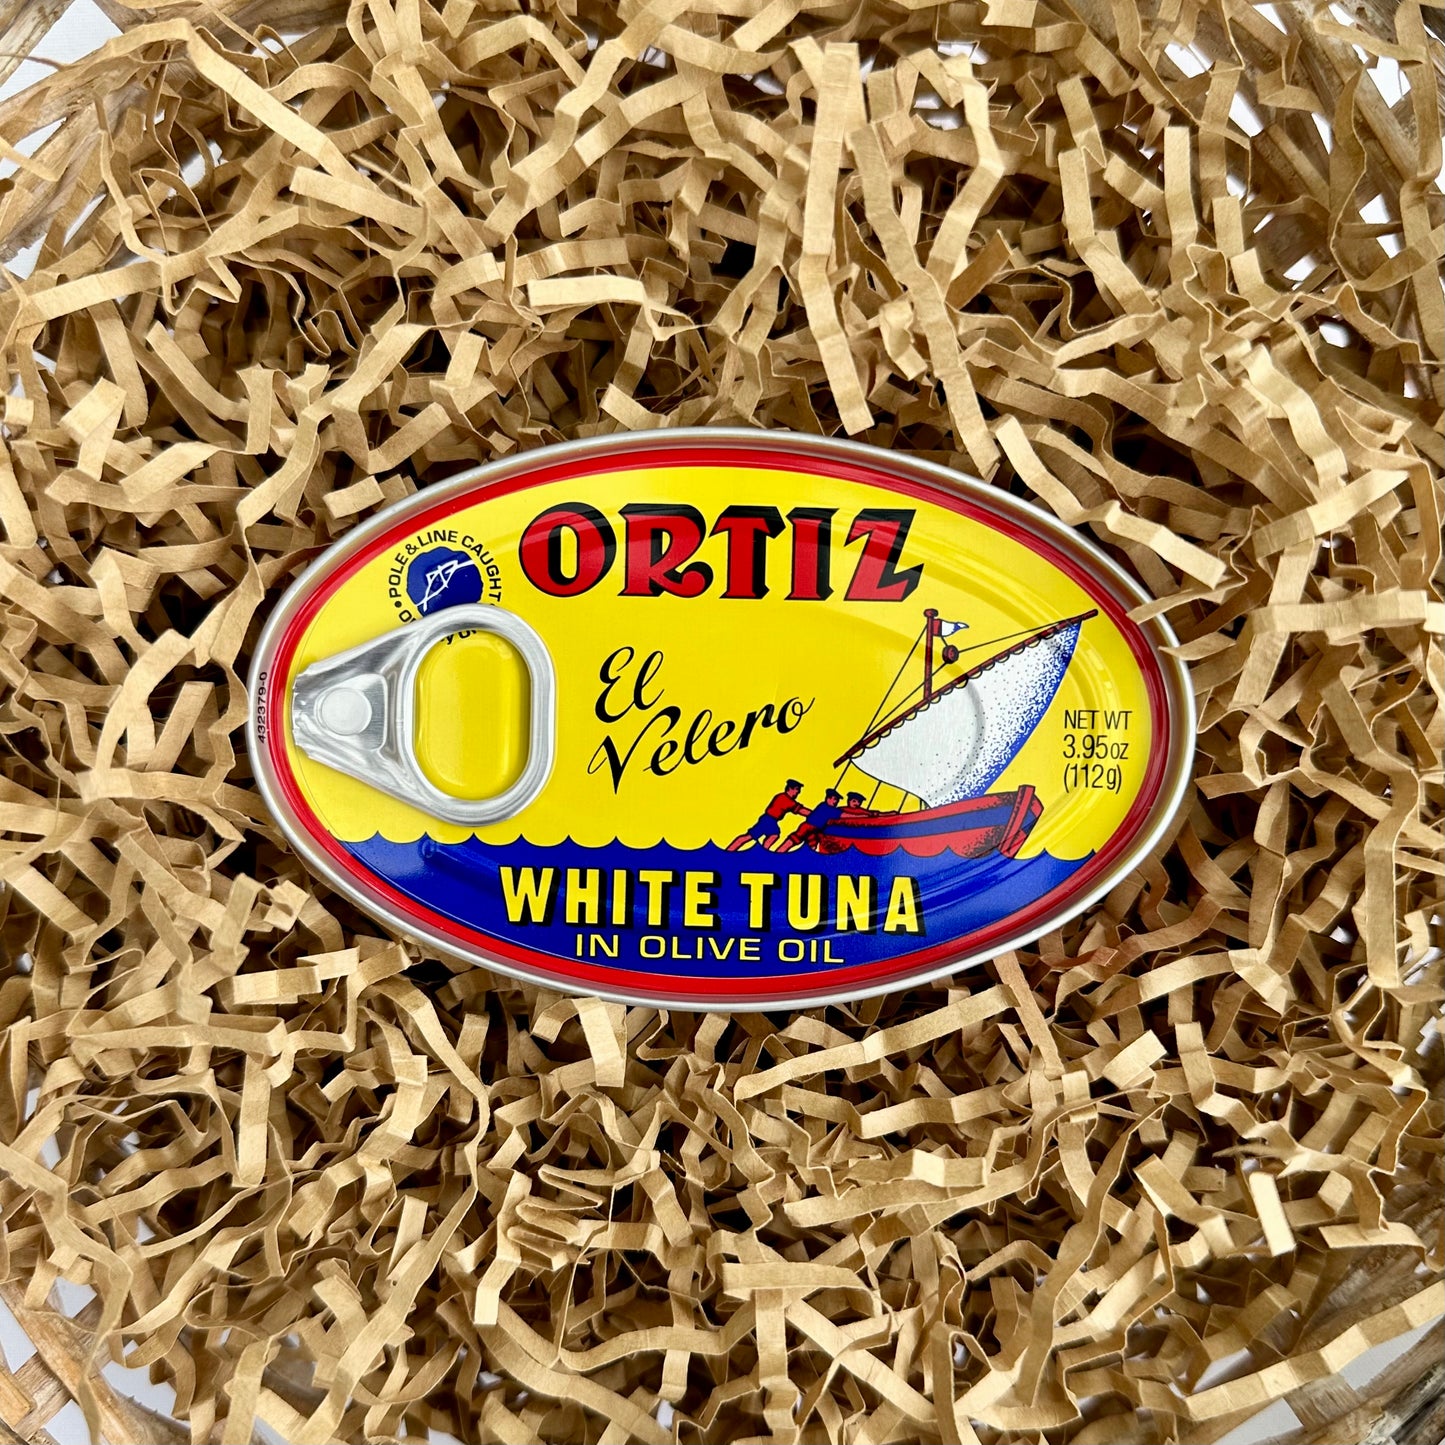 White Tuna in Olive Oil by Ortiz